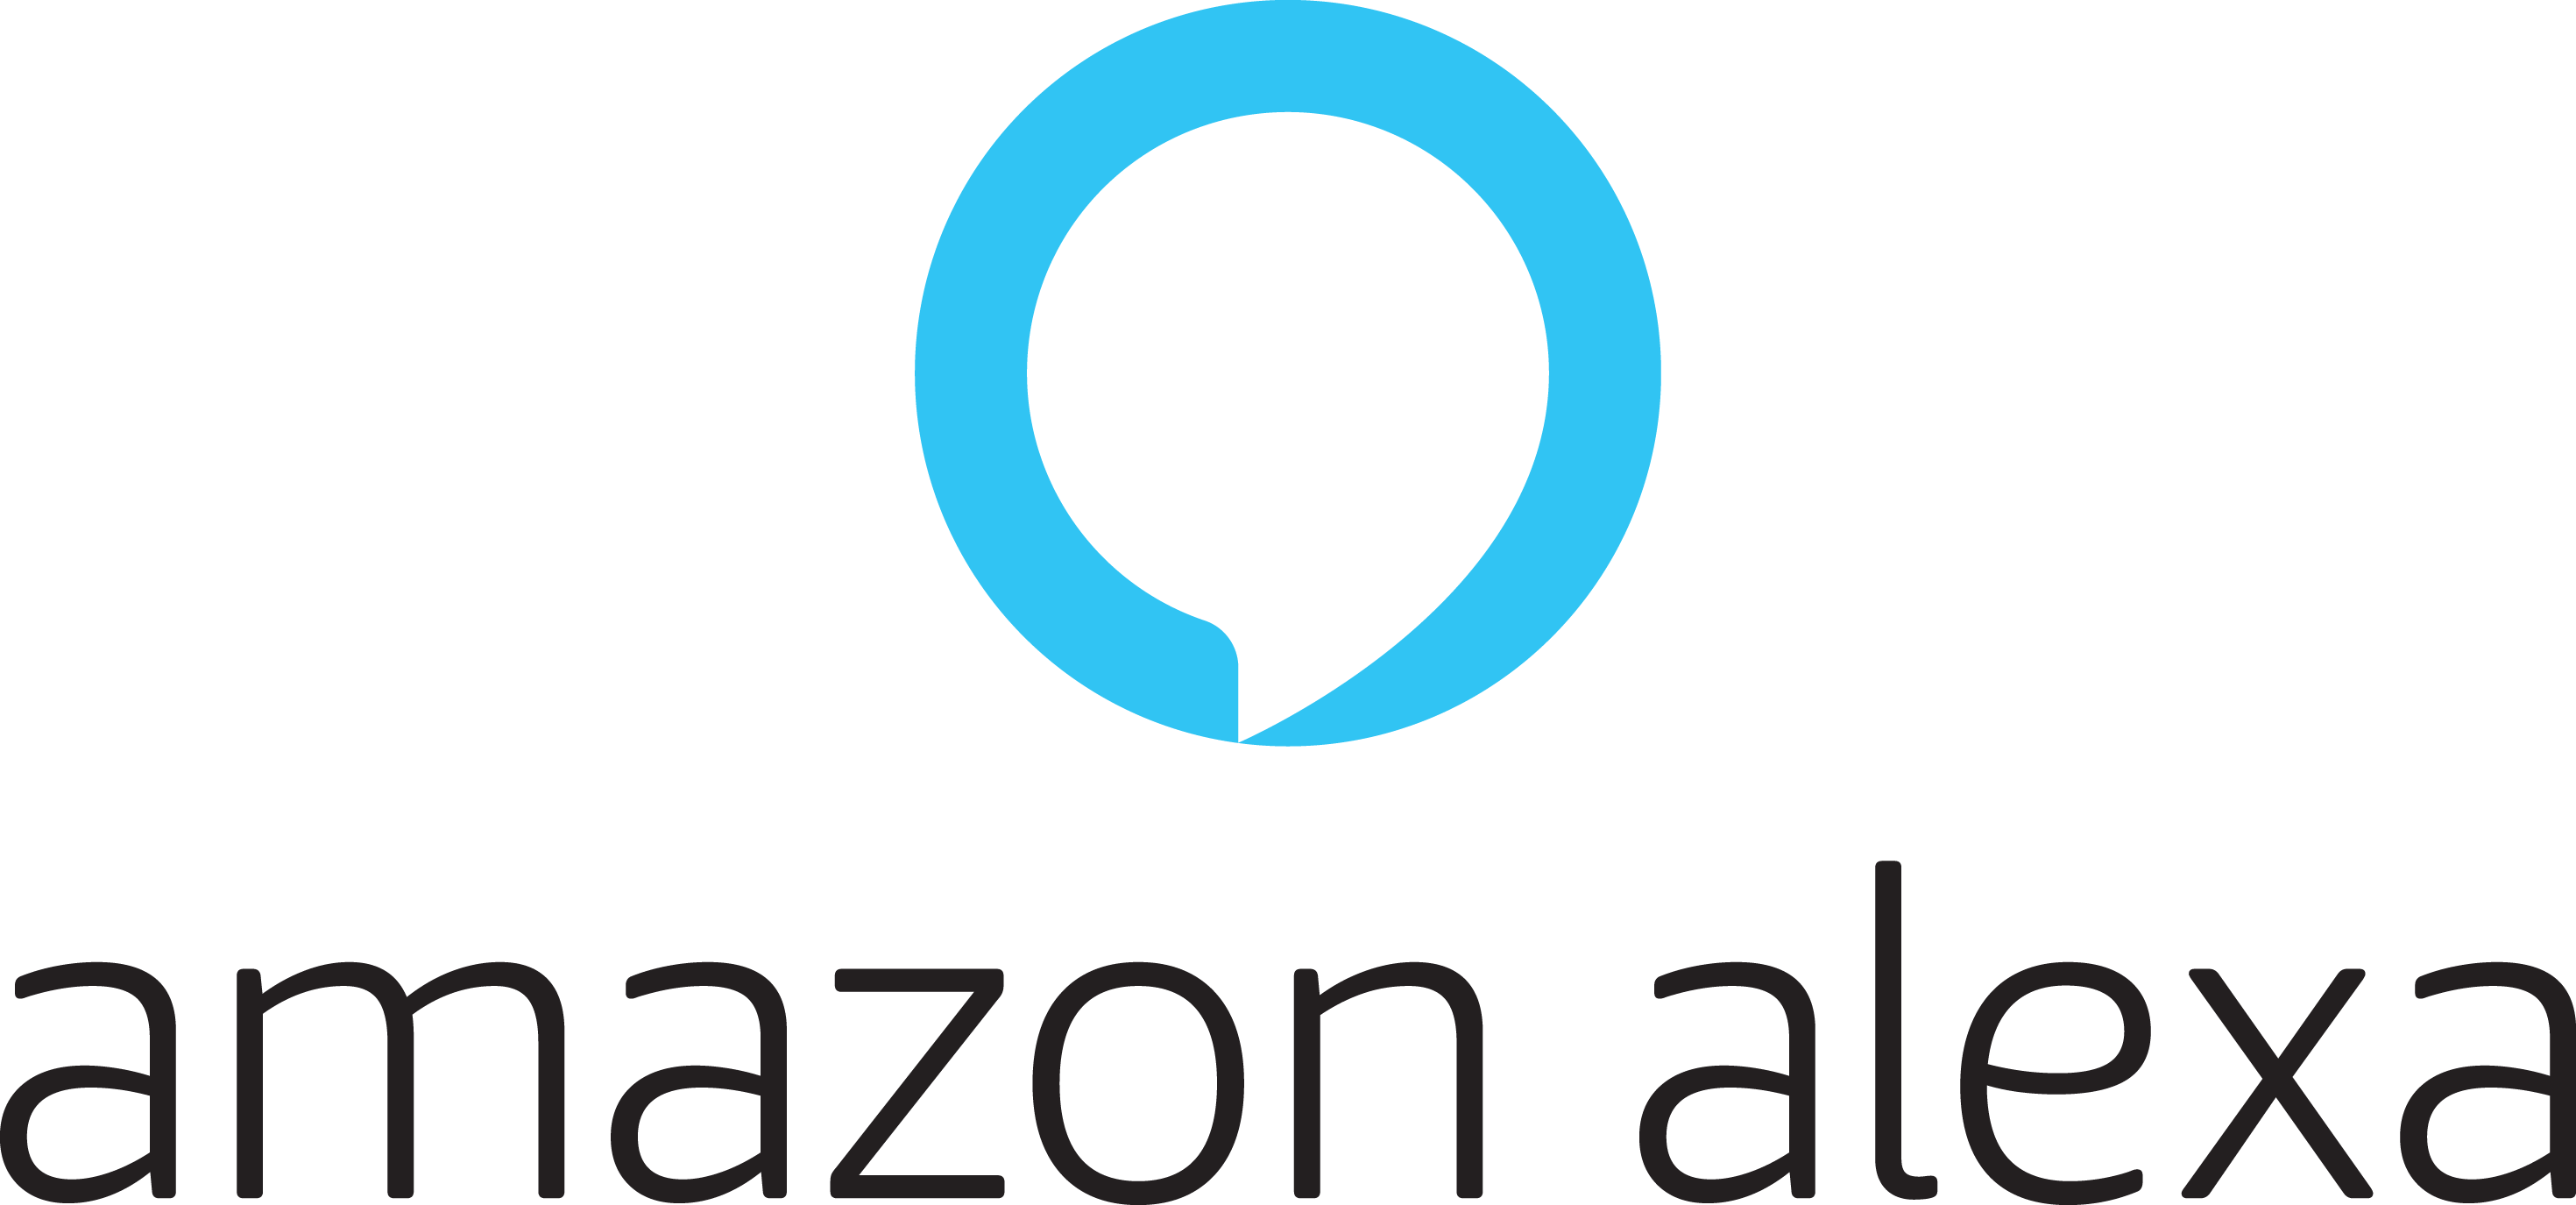 Amazon Alexa logo, logotype